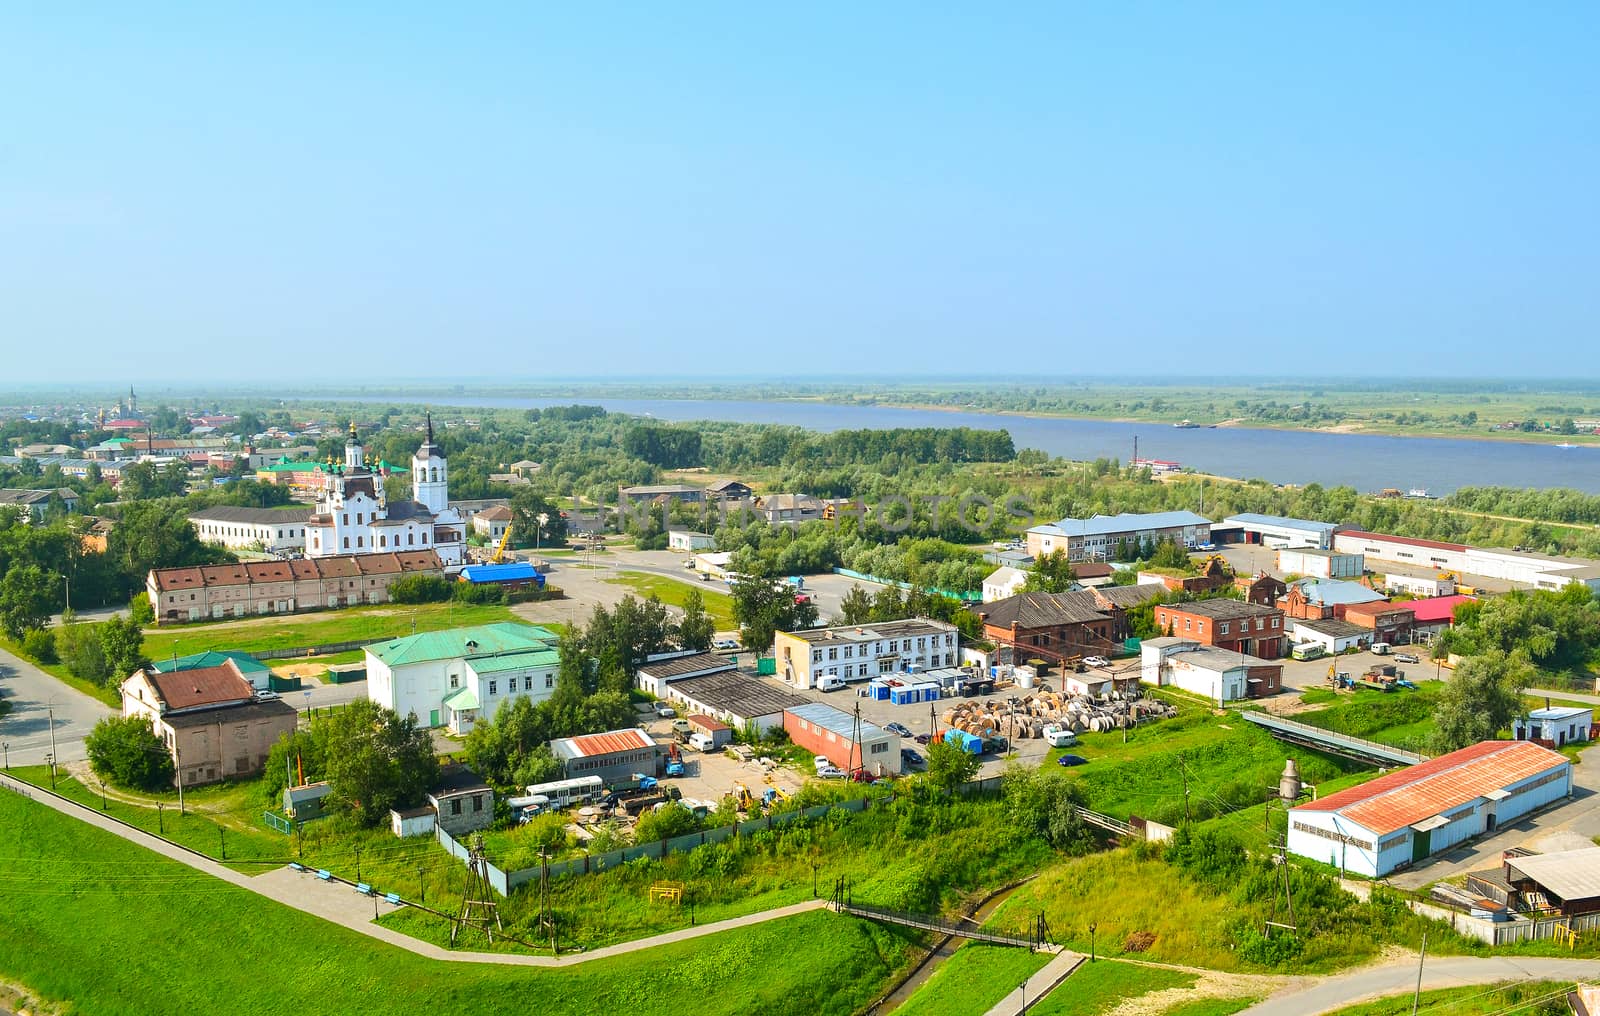 Piedmont district of Tobolsk. View from side of the Tobolsk Krem by veronka72